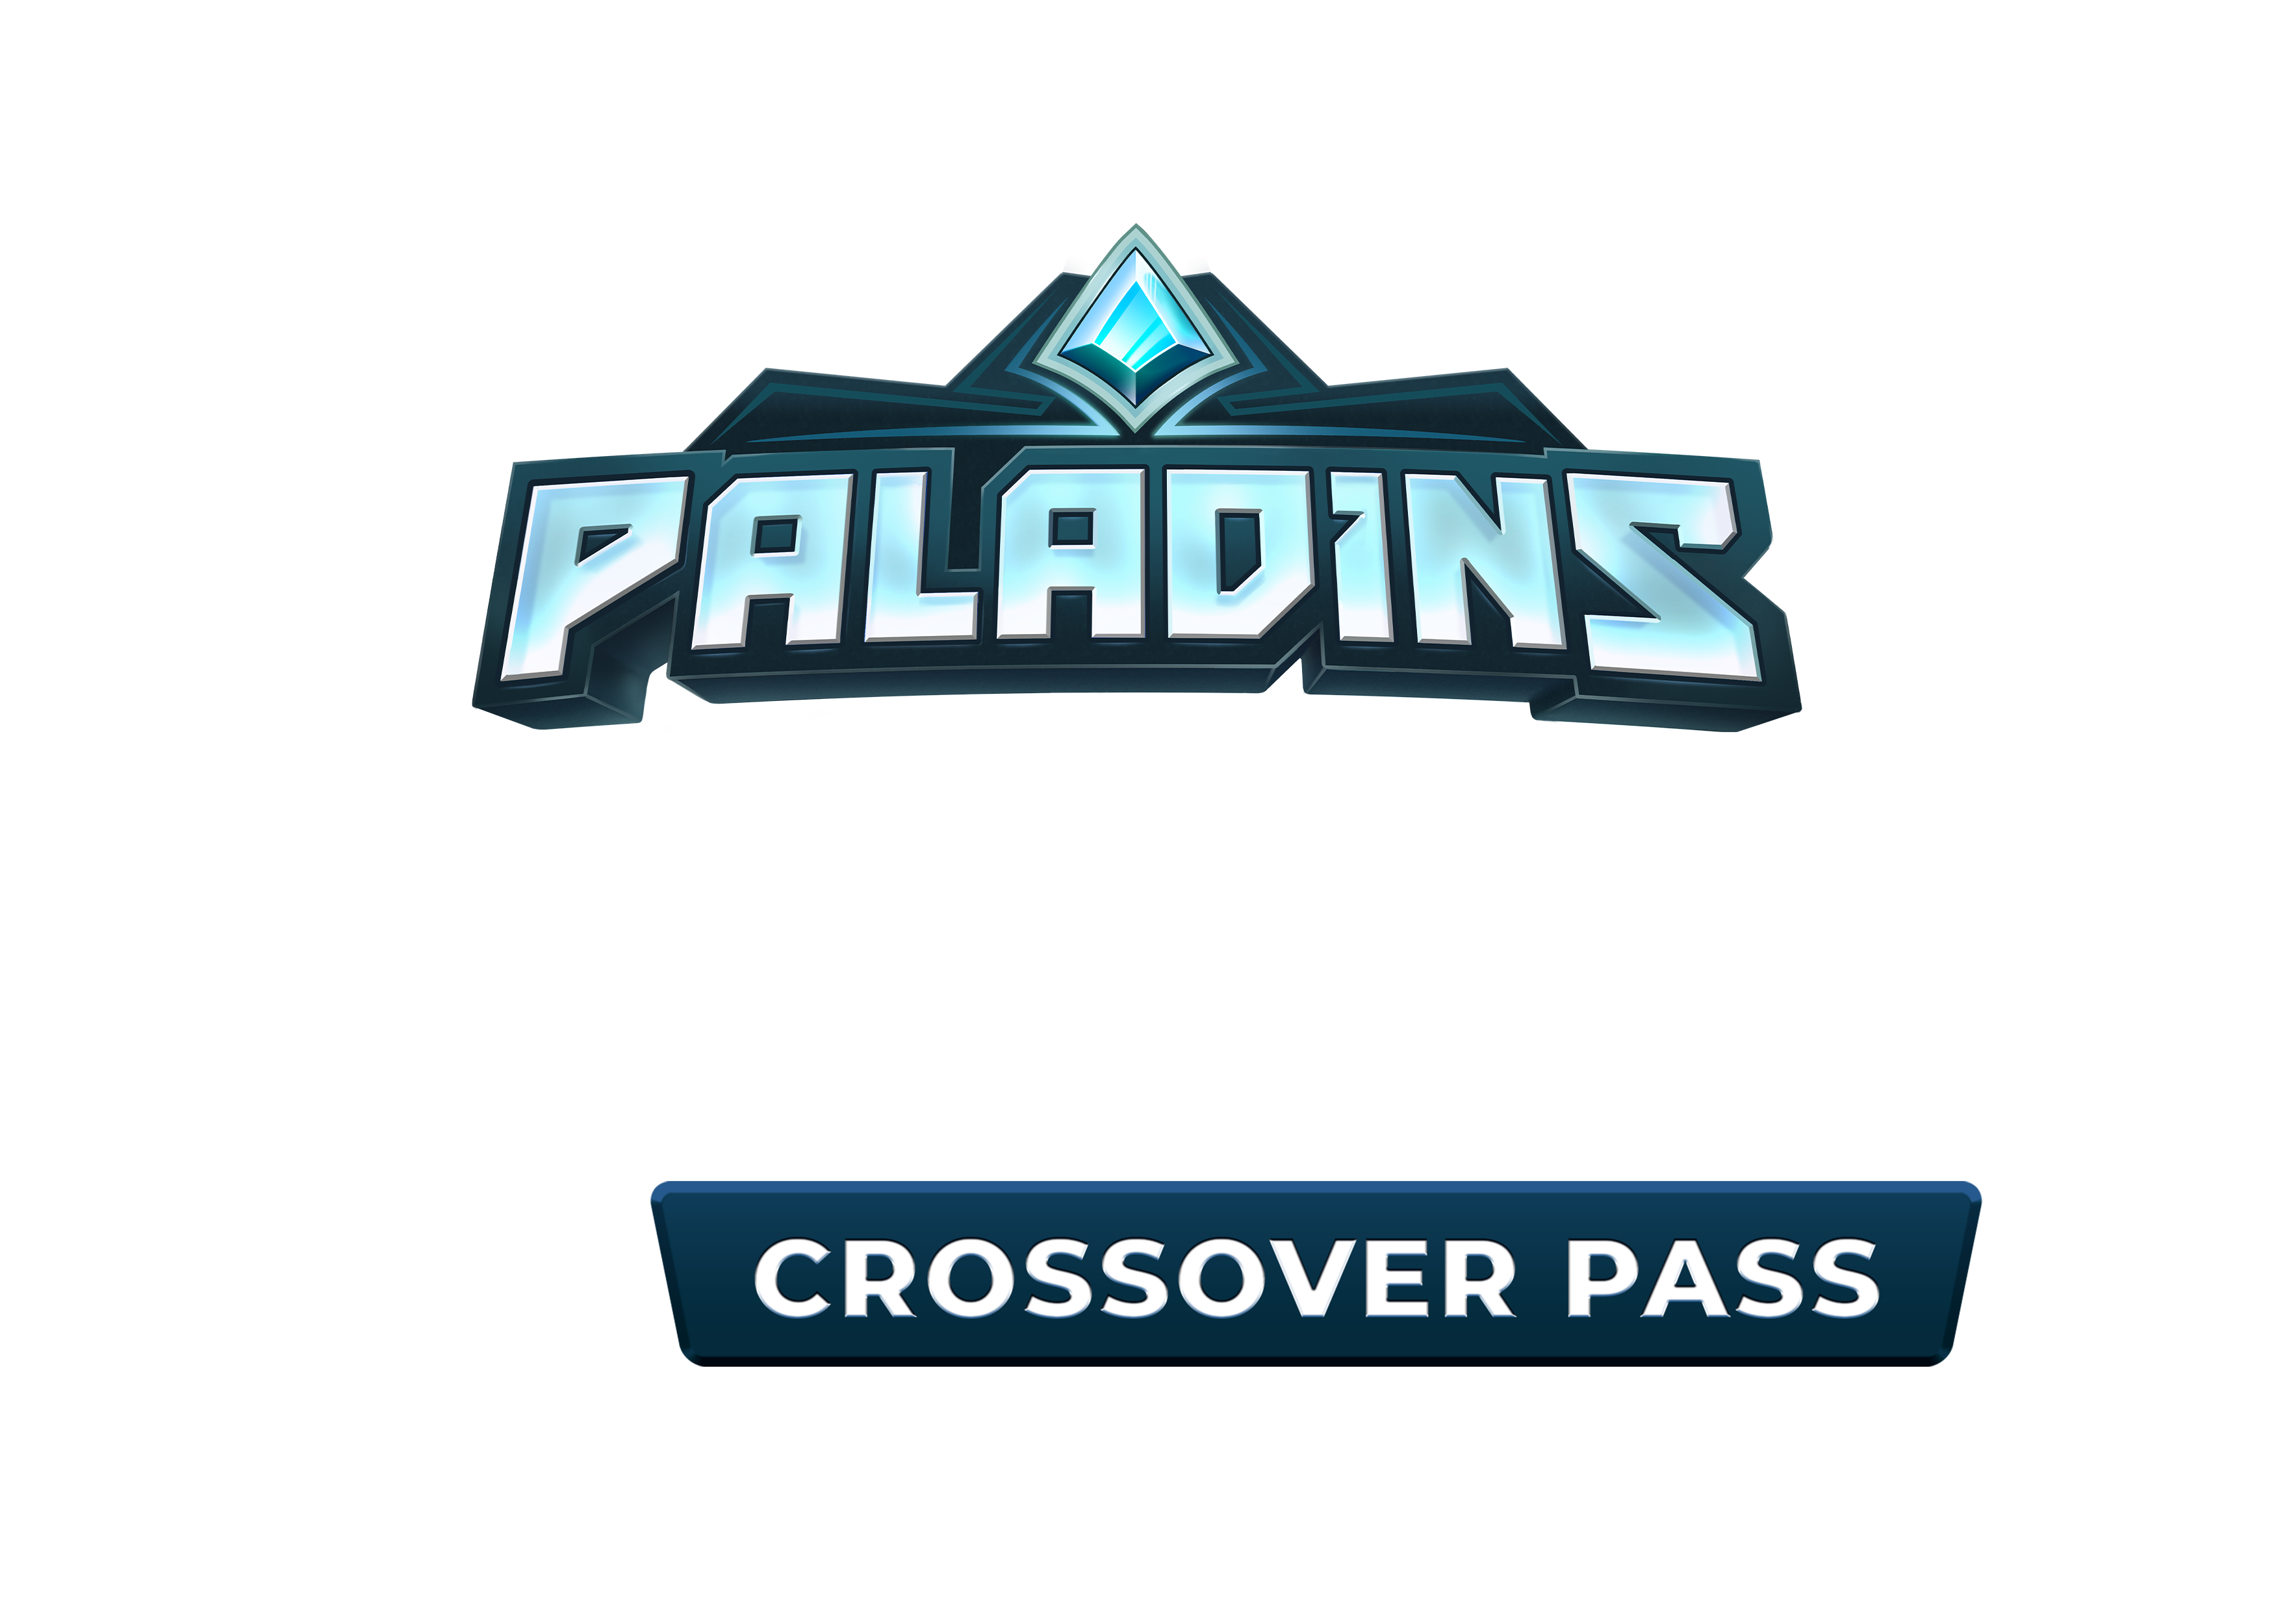 monstercat logo png